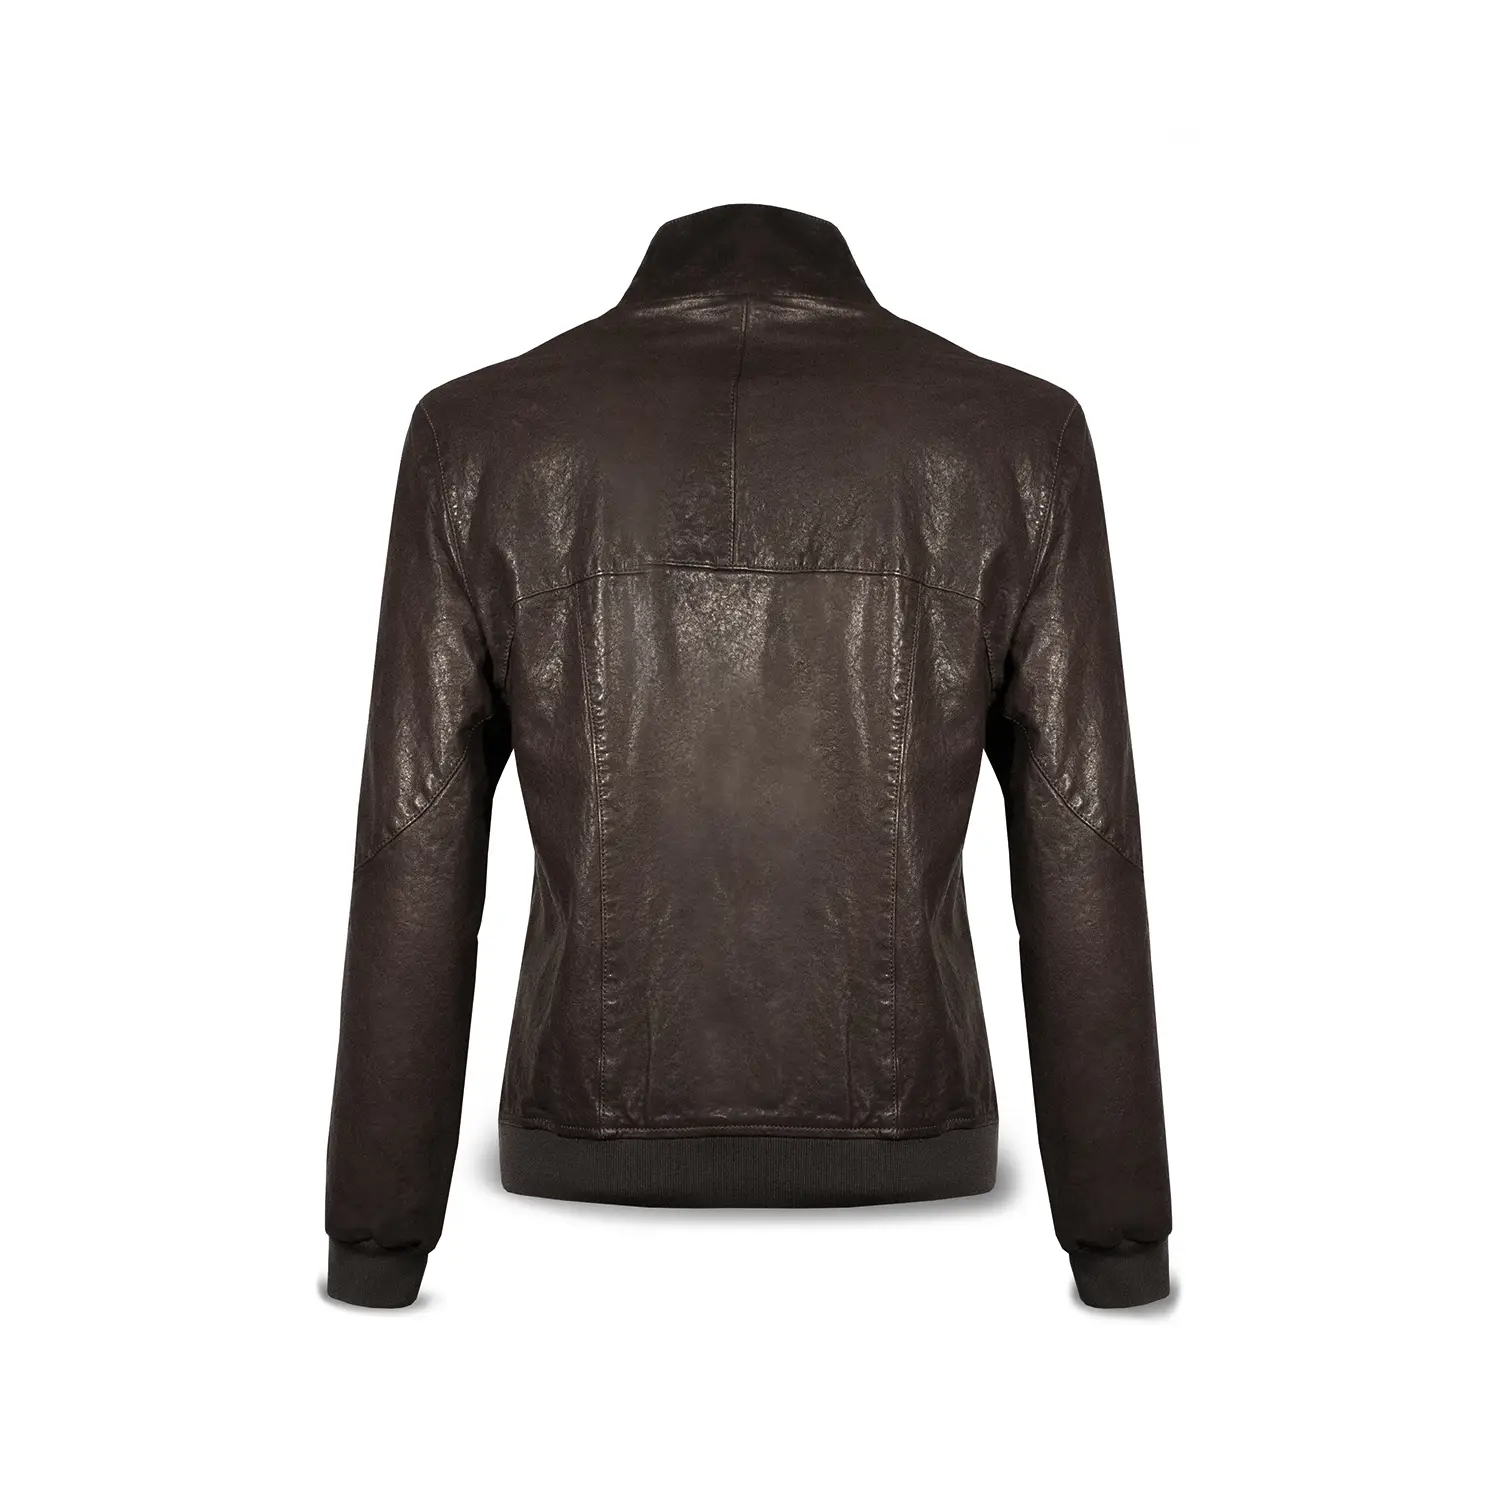 dmd.eu - BUNNY BROWN (NICHT GENEHMIGT) DMD – Bunny Brown Leather (non omologata) – back